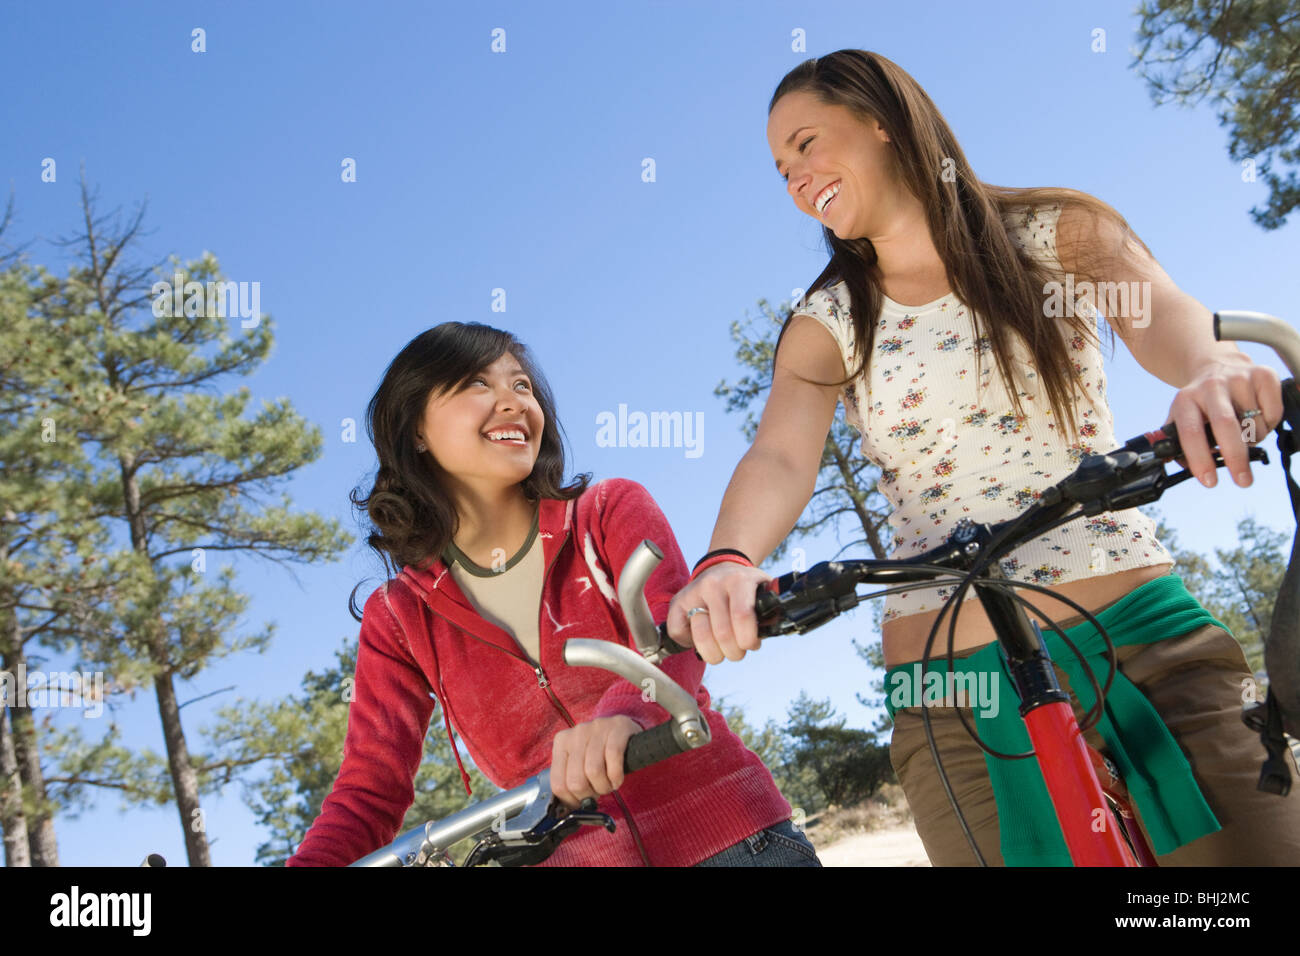 Two women stand smiling with mountain bikes Stock Photo